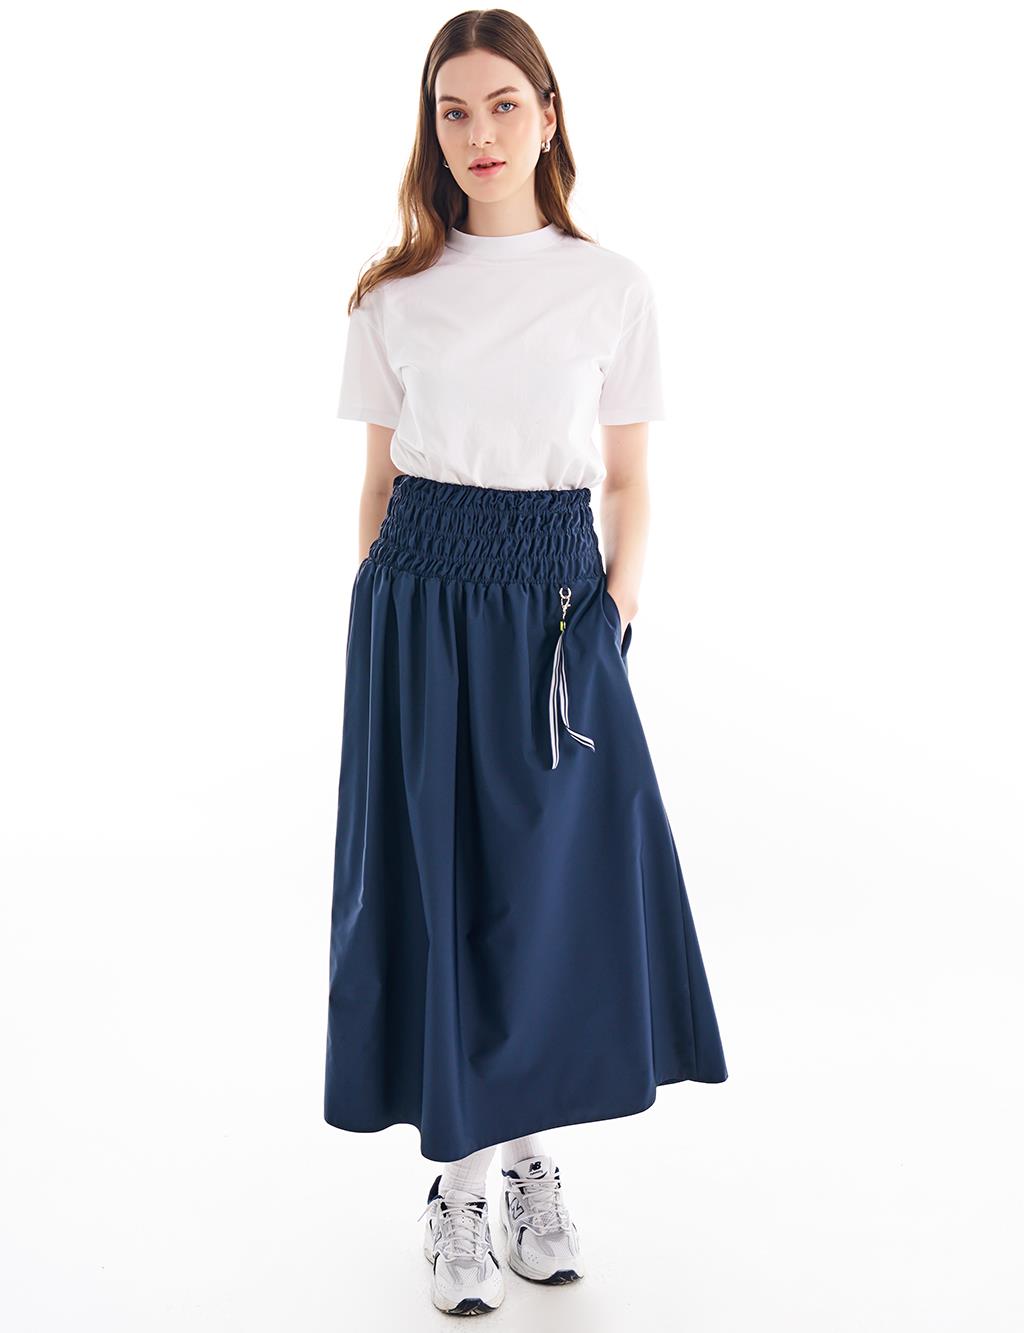 Elastic Waist Accessory Detailed Skirt Navy Blue